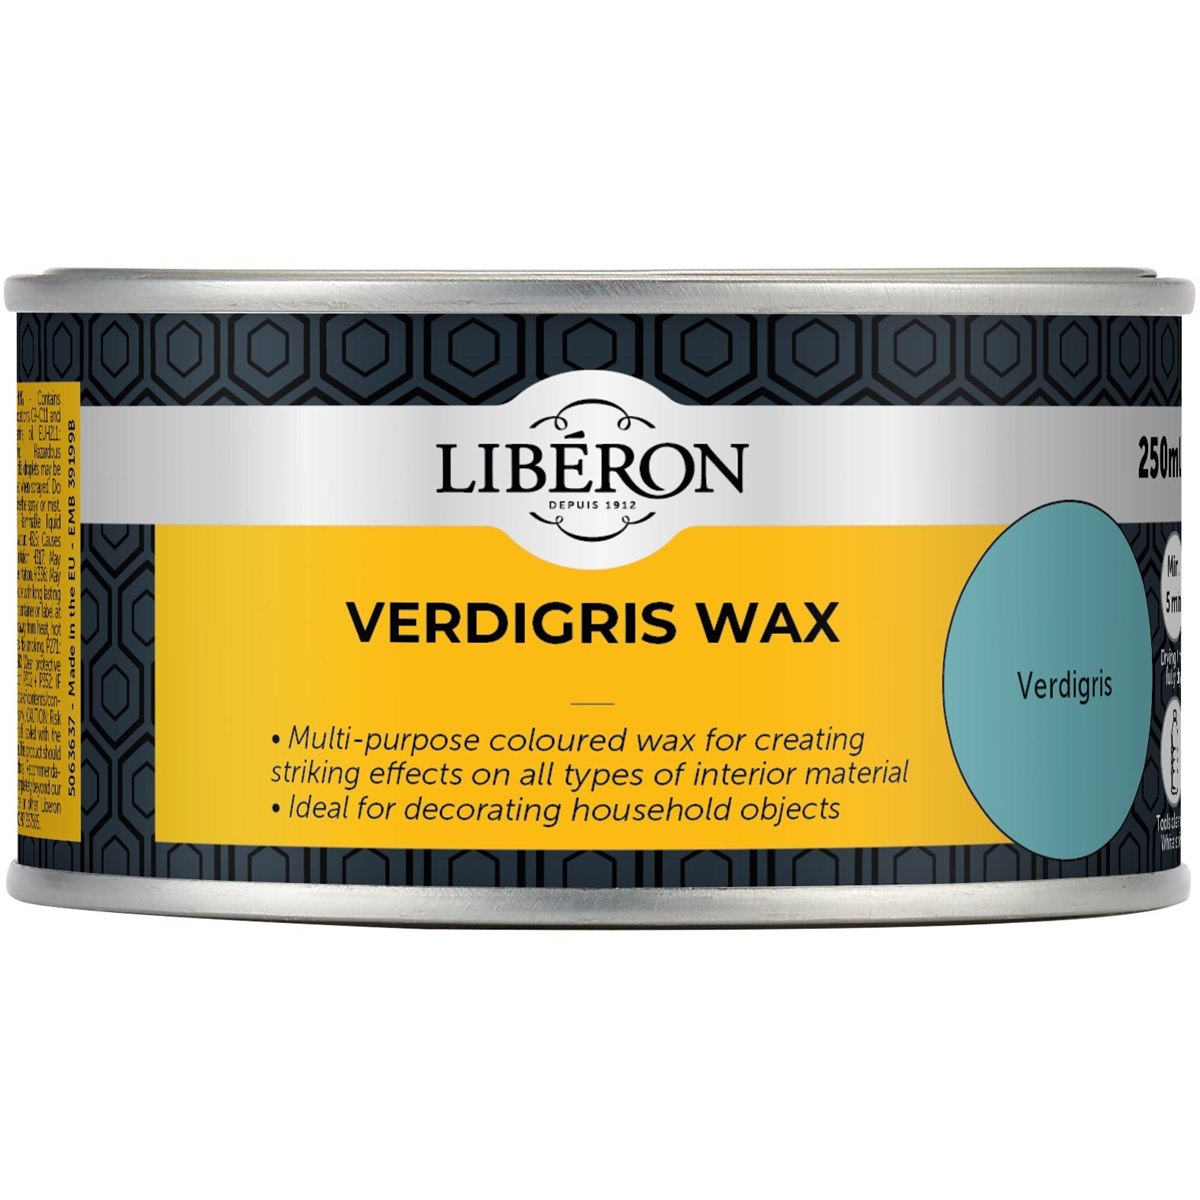 Liberon Special Effects Wax Verdigris